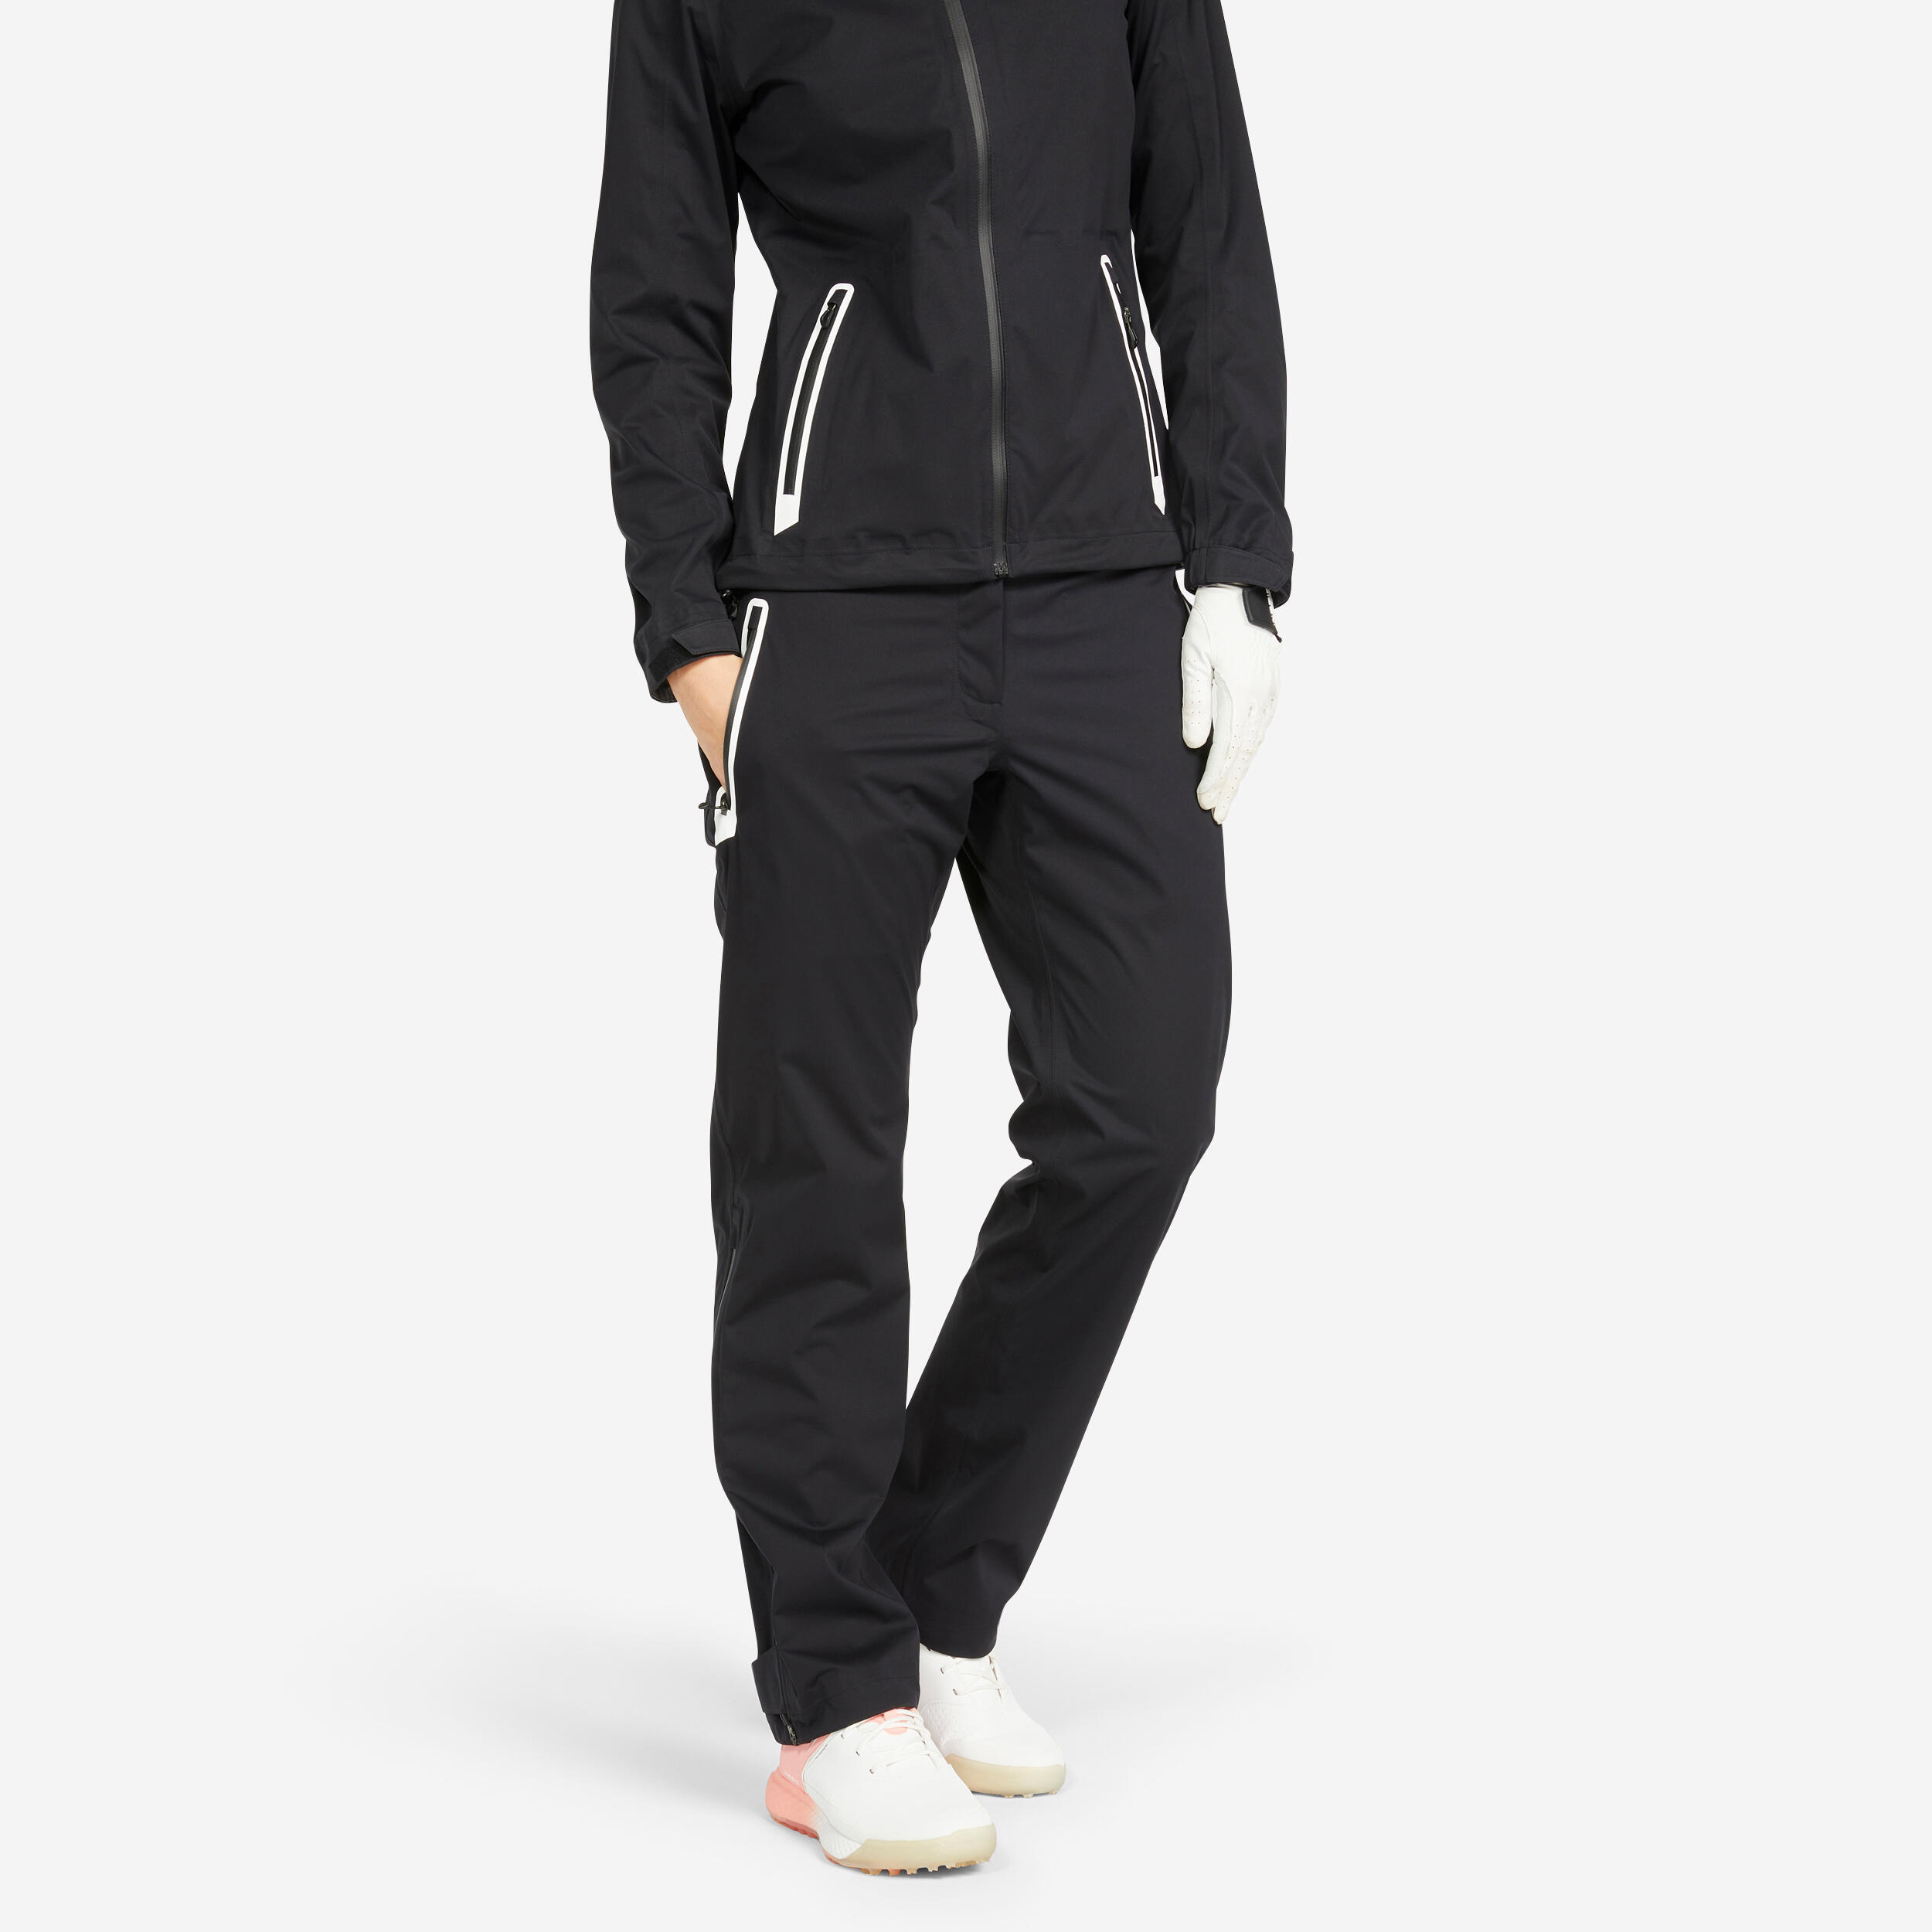 INESIS Women's golf waterproof rain trousers RW500 black